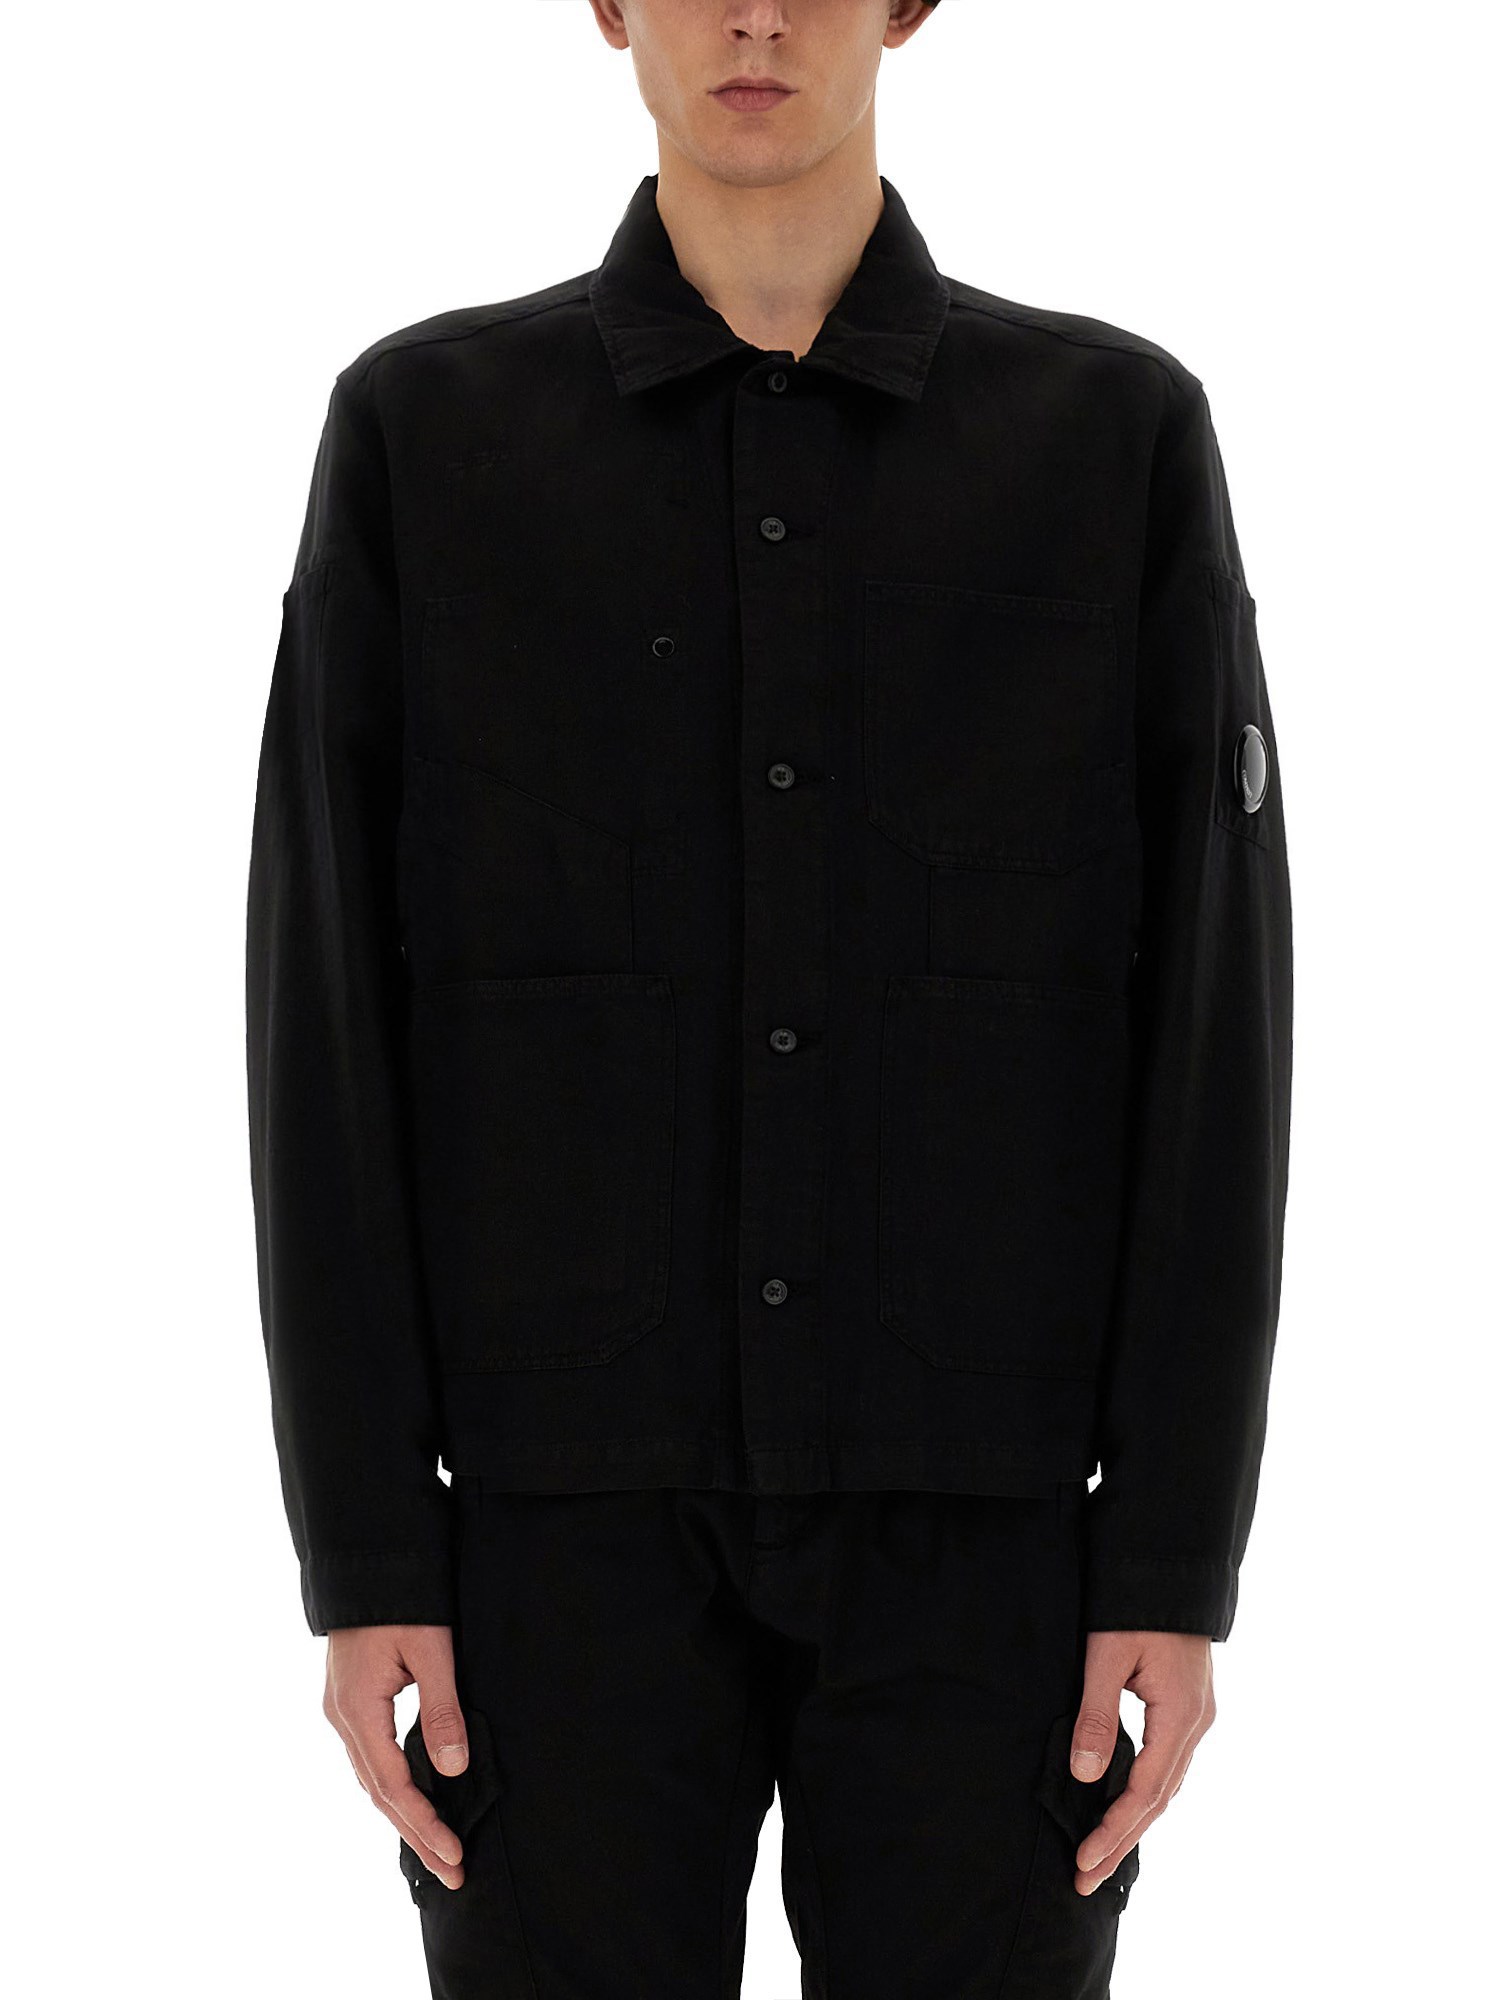 C.P. Company c.p. company cotton and linen shirt jacket